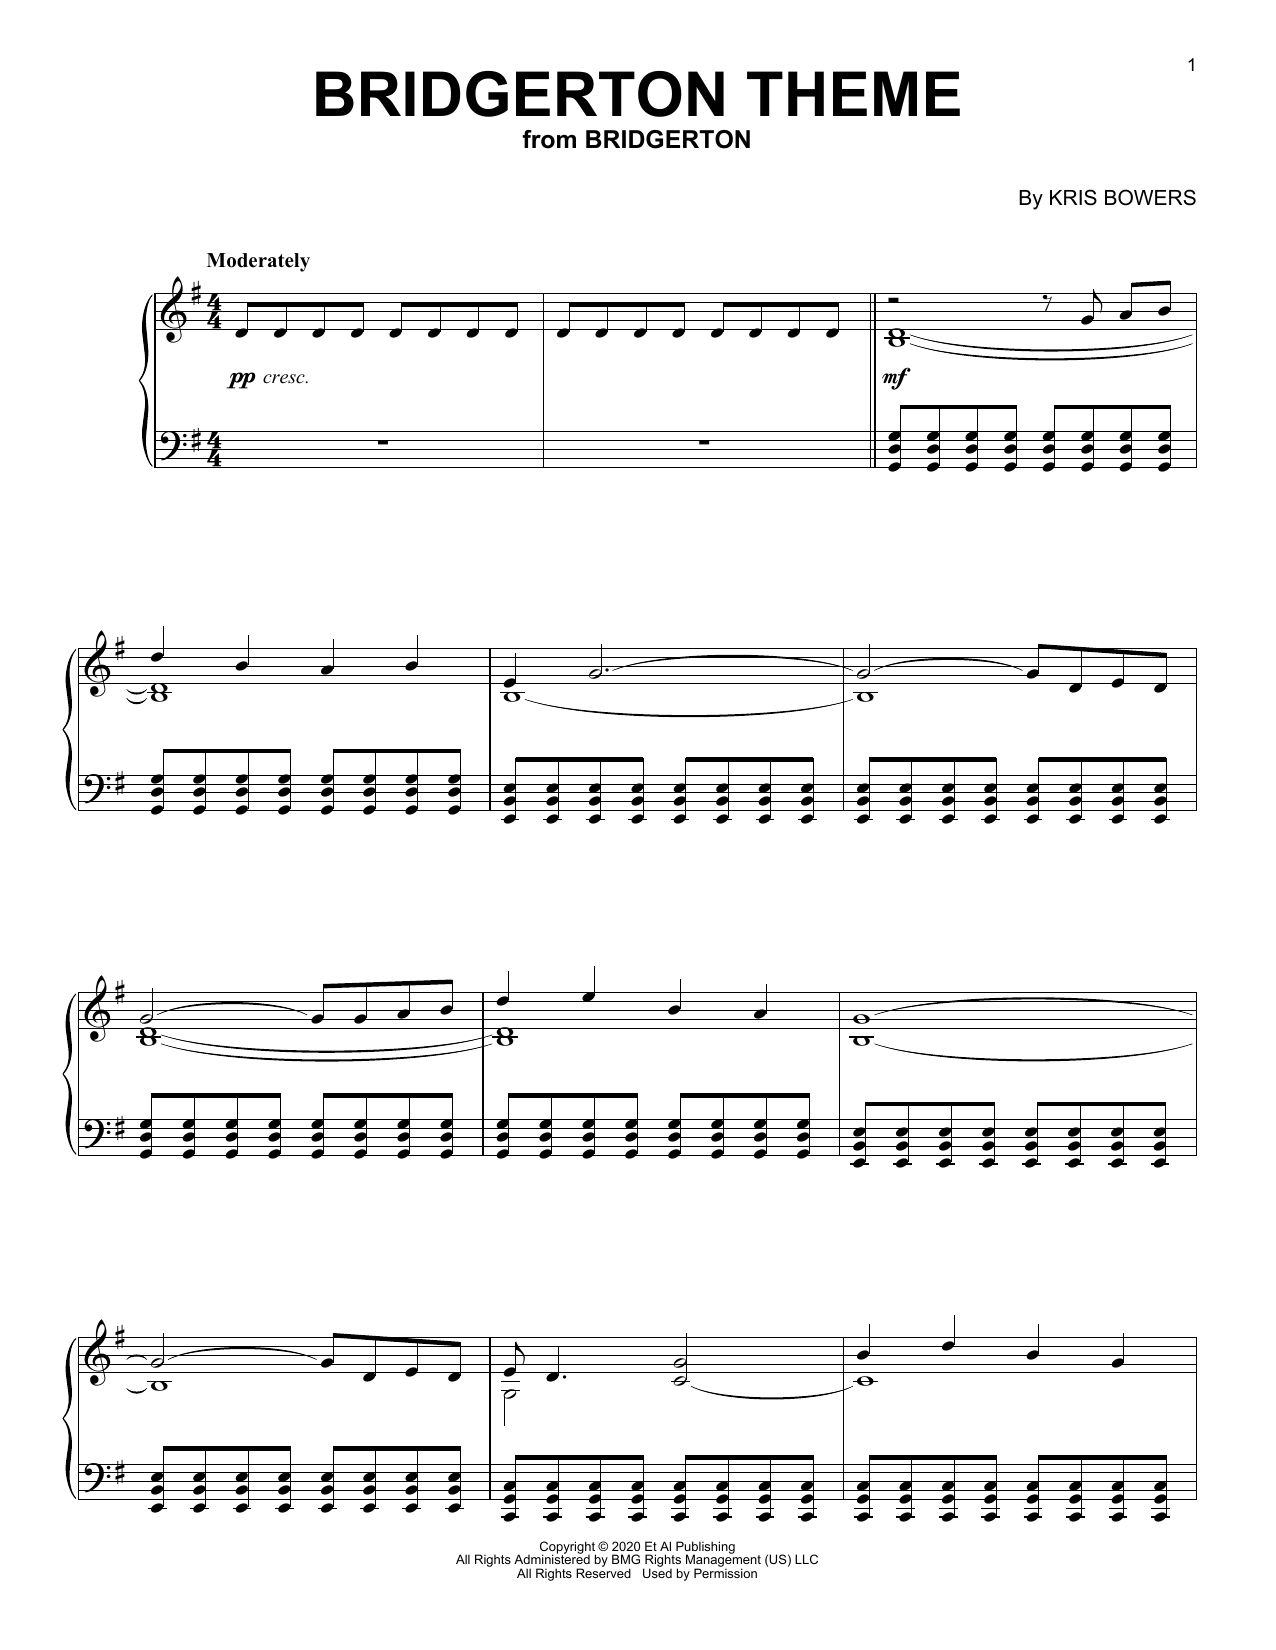 Kris Bowers Bridgerton Theme (from the Netflix series Bridgerton) Sheet Music Notes & Chords for Piano Solo - Download or Print PDF